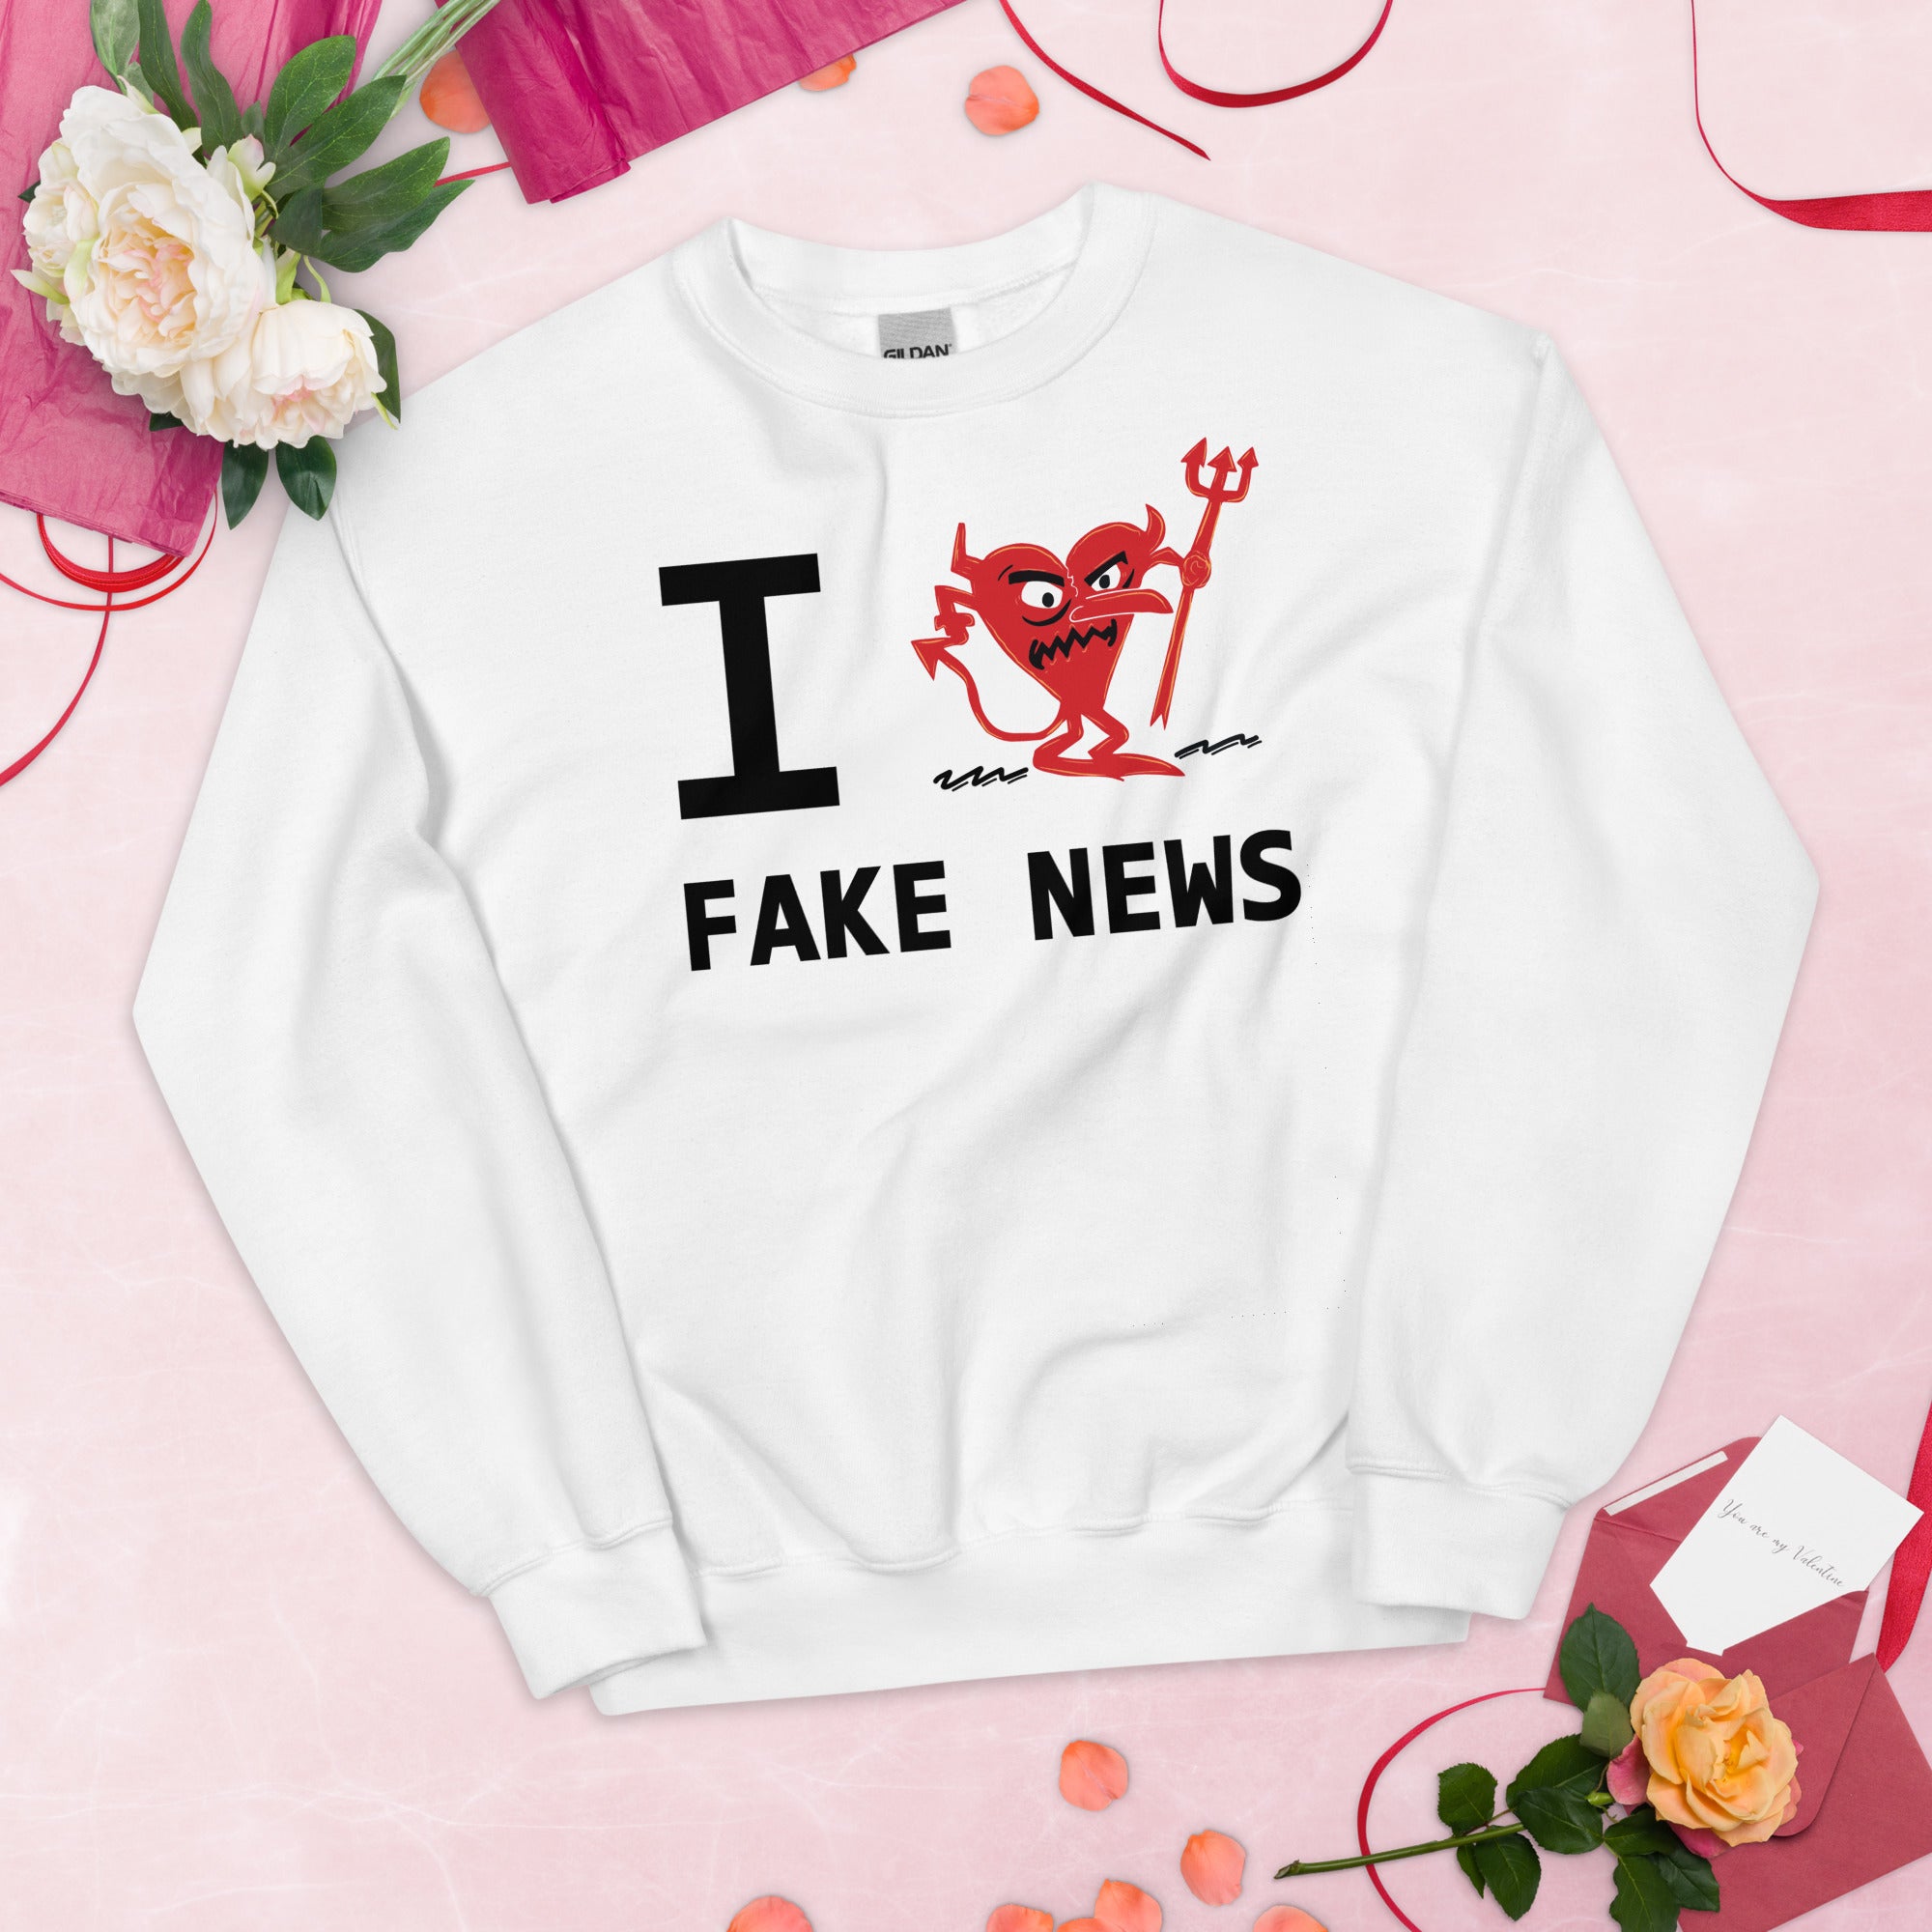 Fake News Unisex Sweatshirt